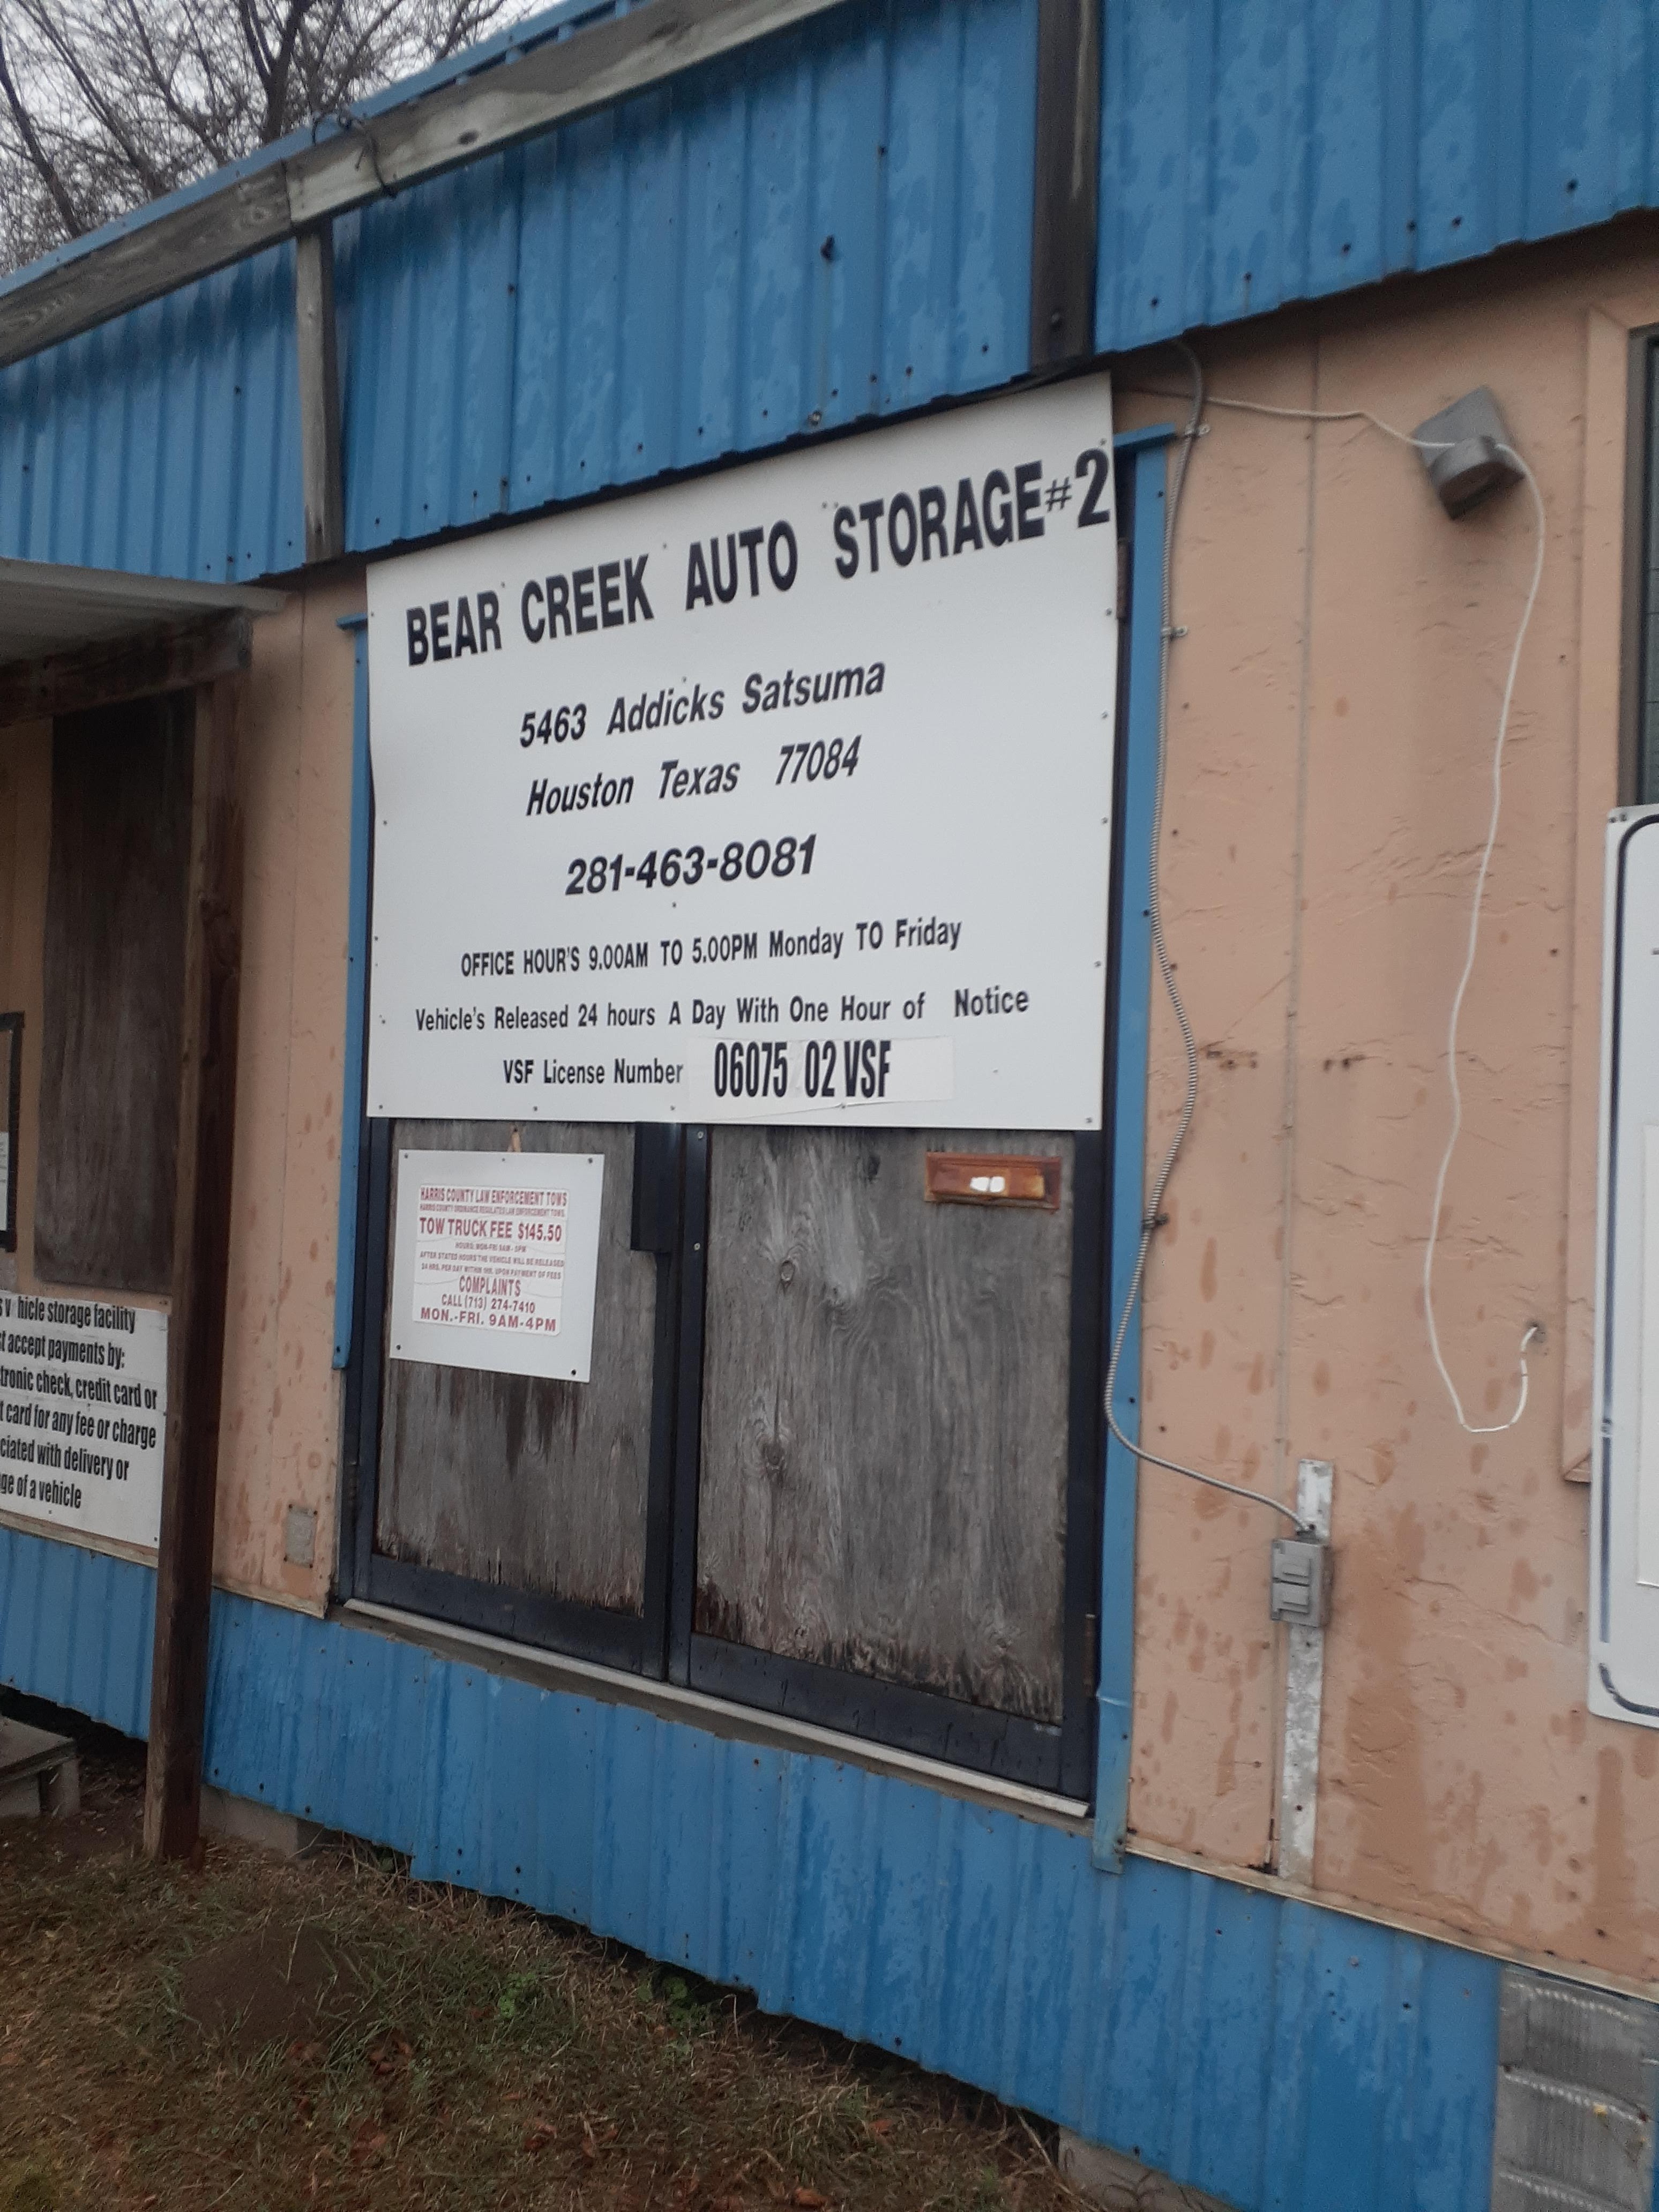 Bear Creek Auto Storage #2 VSF